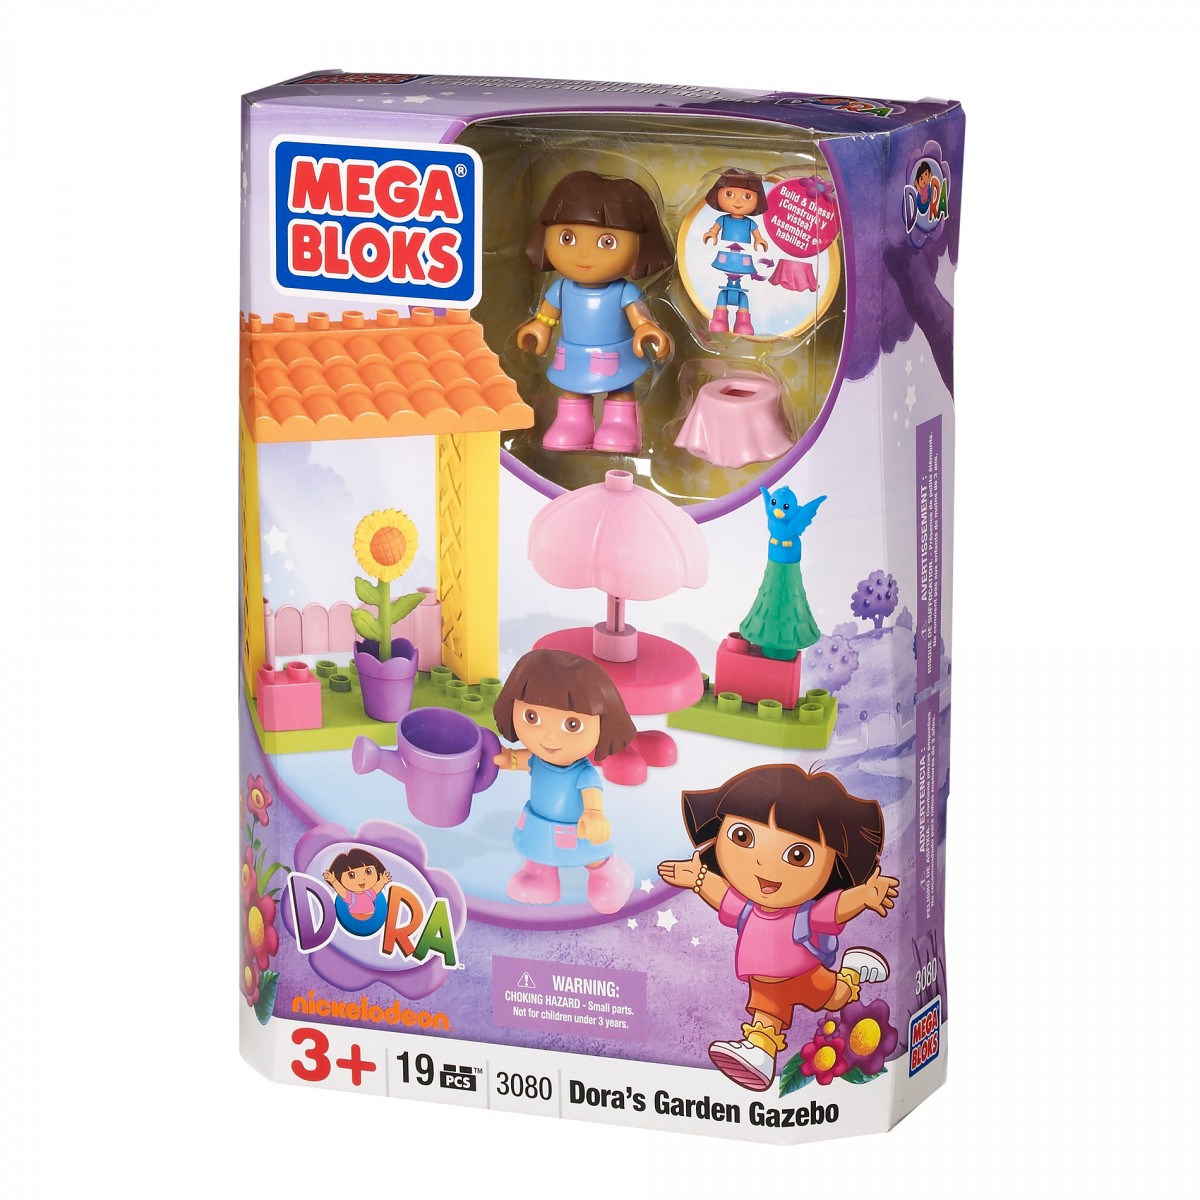 DORA Mega Bloks Playset Dora's Garden Gazebo